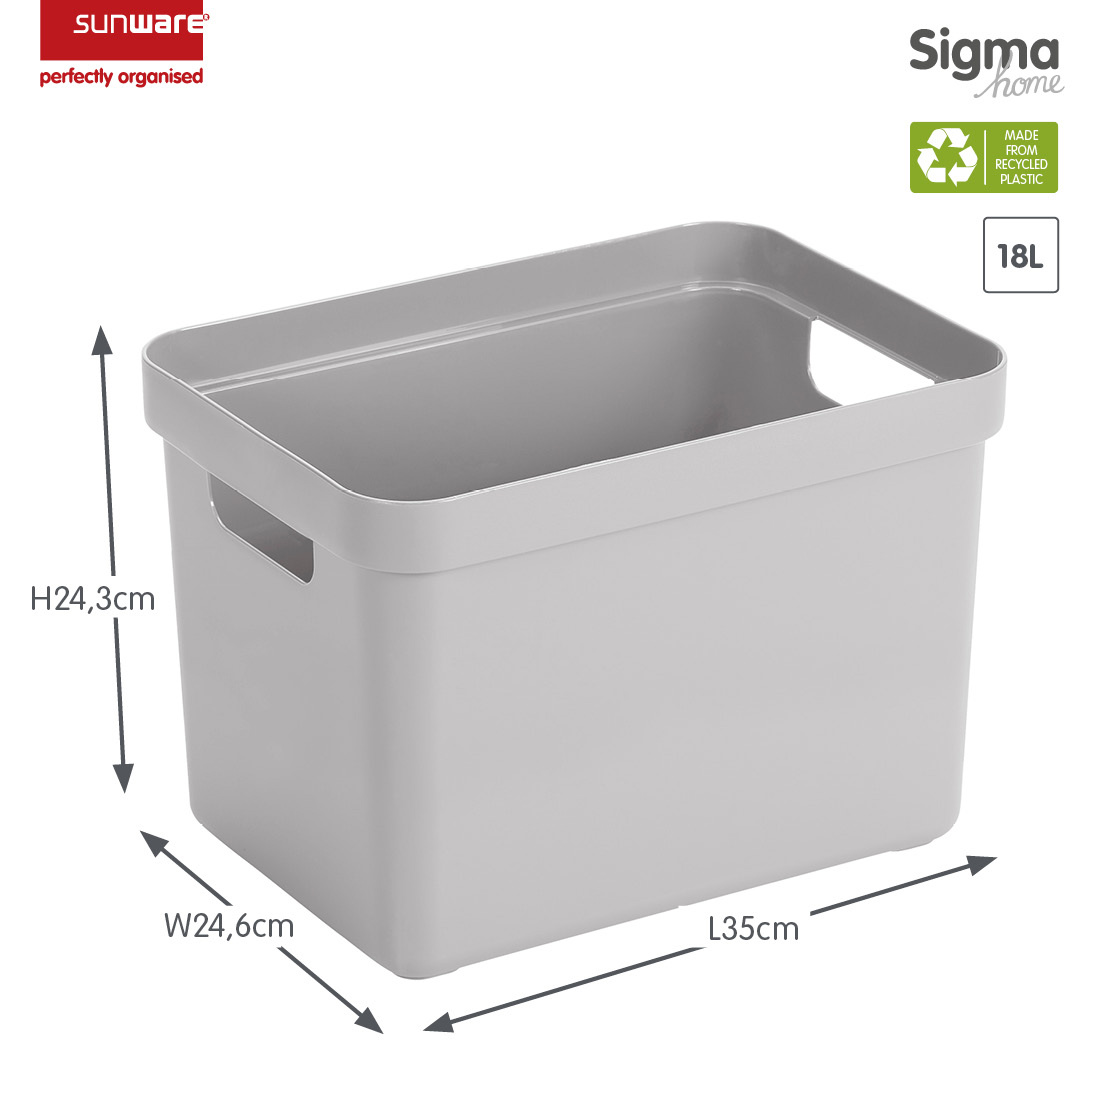 Sigma home storage box 18L grey